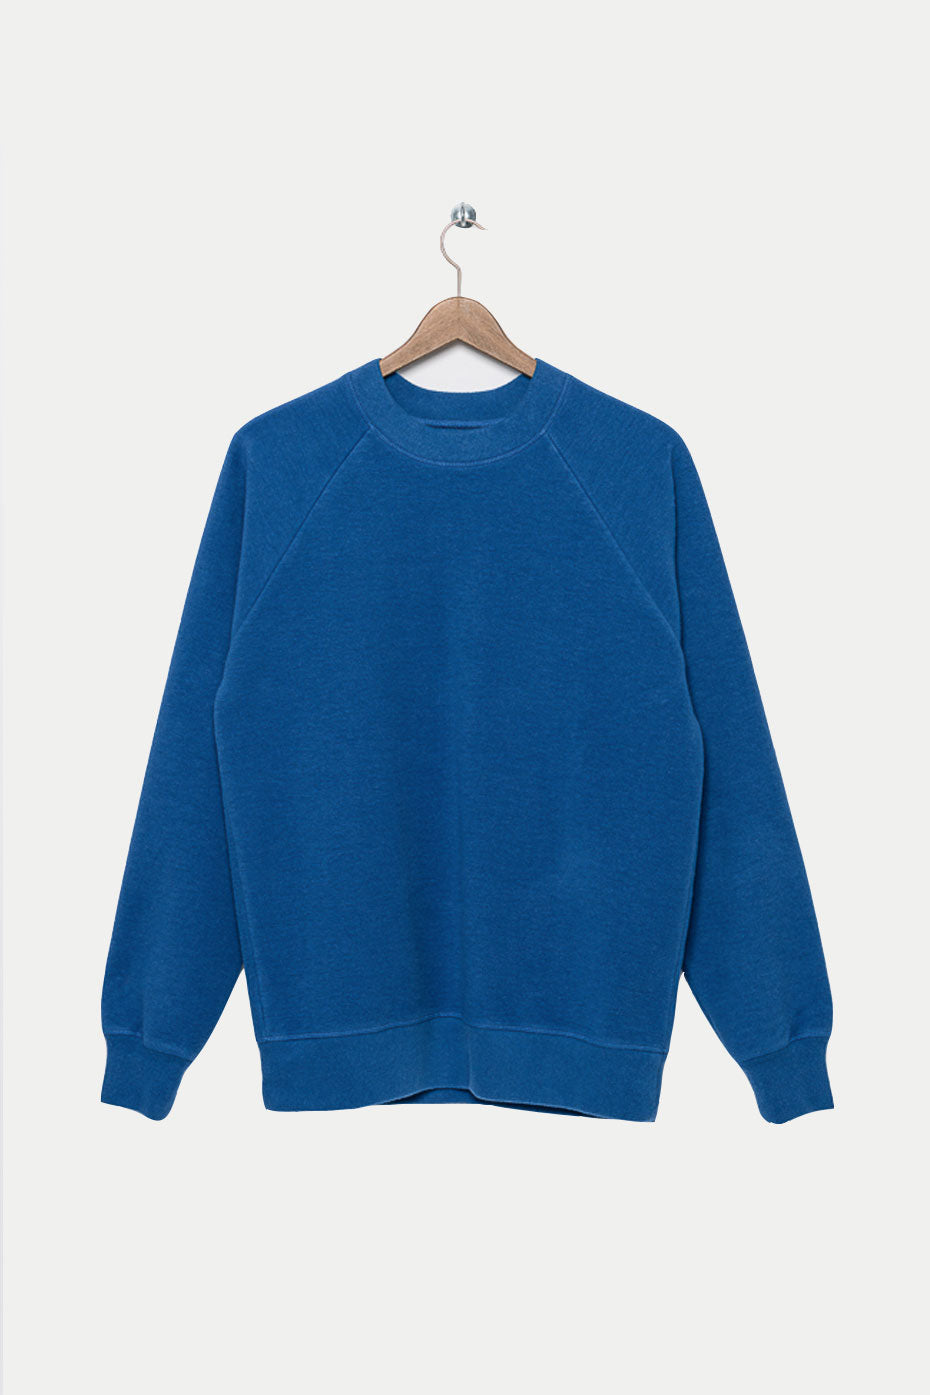 La Paz Blue Fleece Cunha Sweatshirt